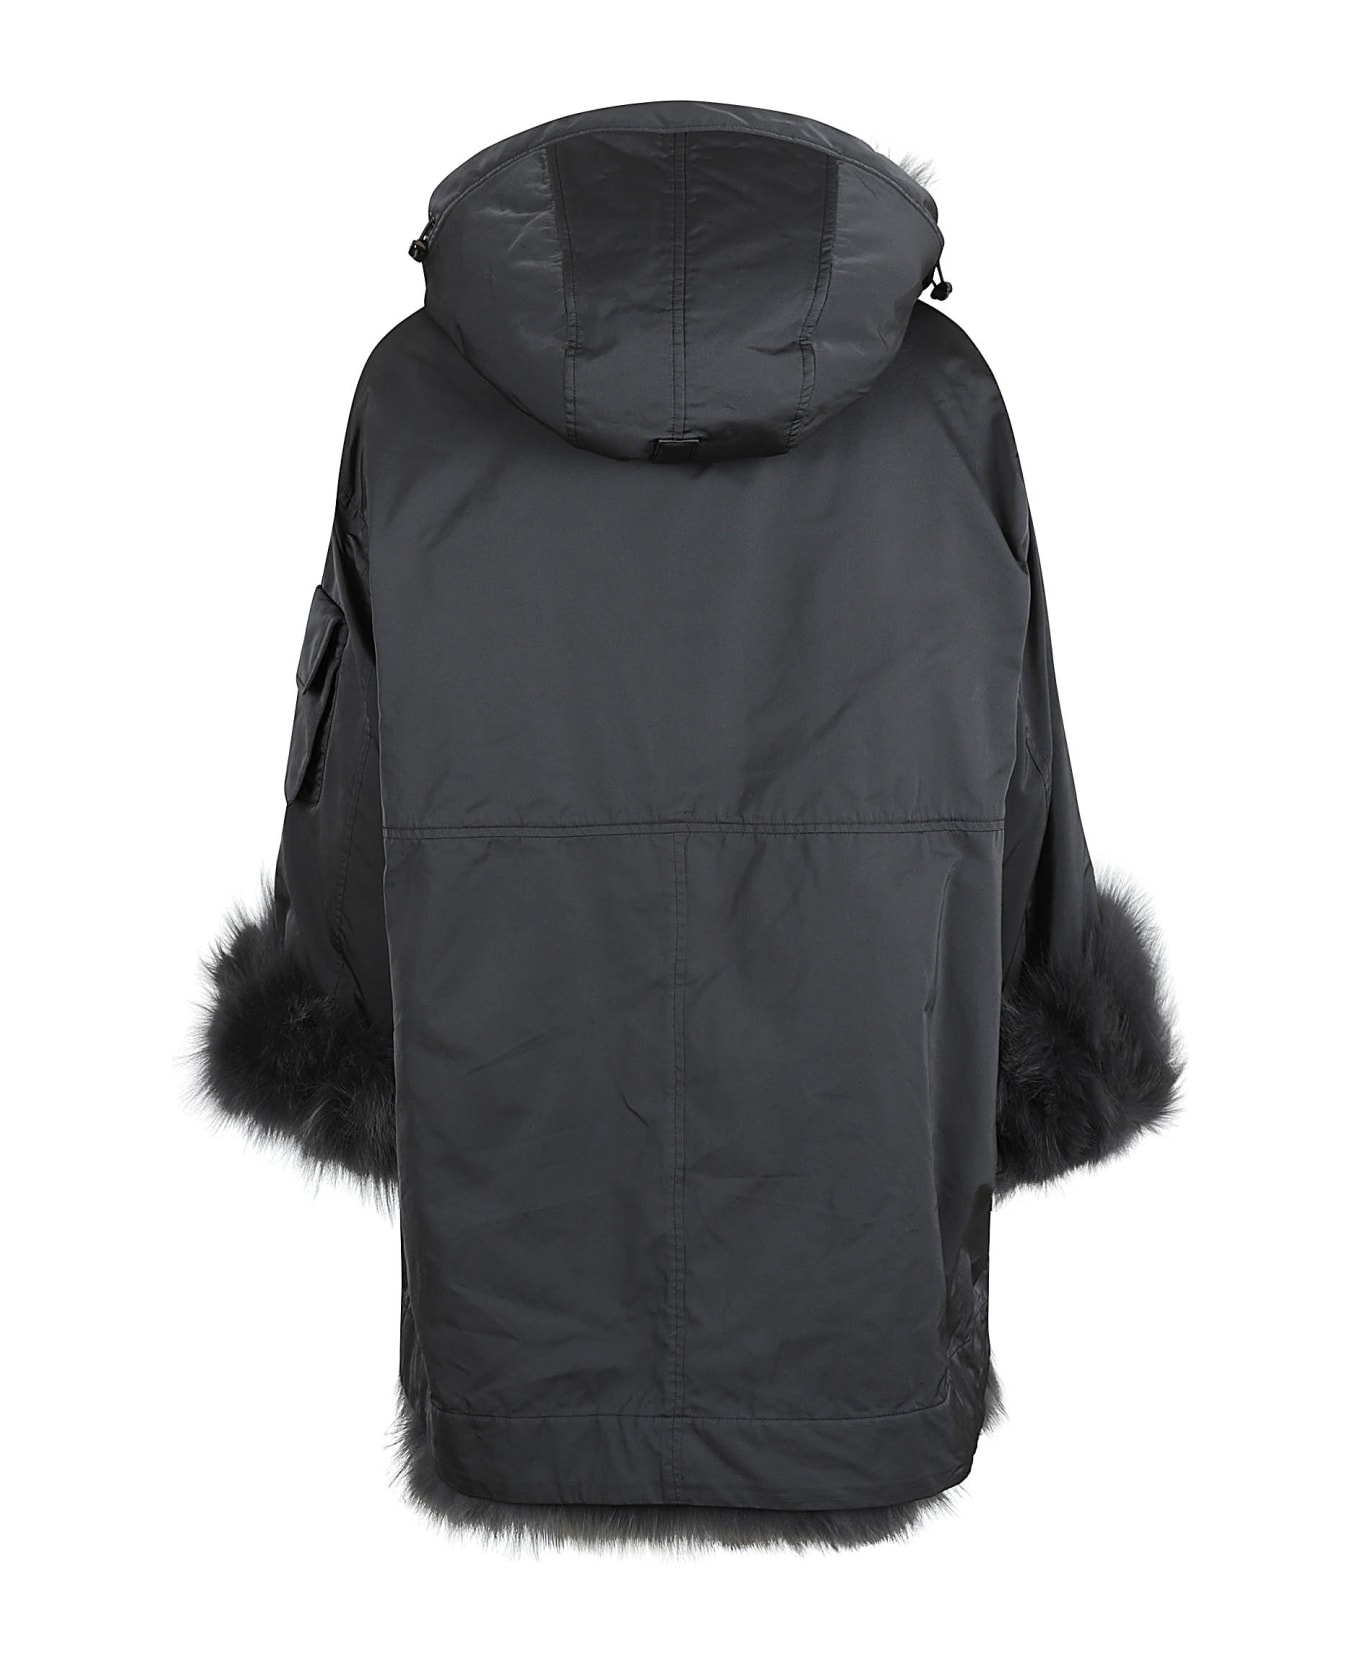 Ermanno Scervino Fur Applique Oversized Jacket - Iron コート